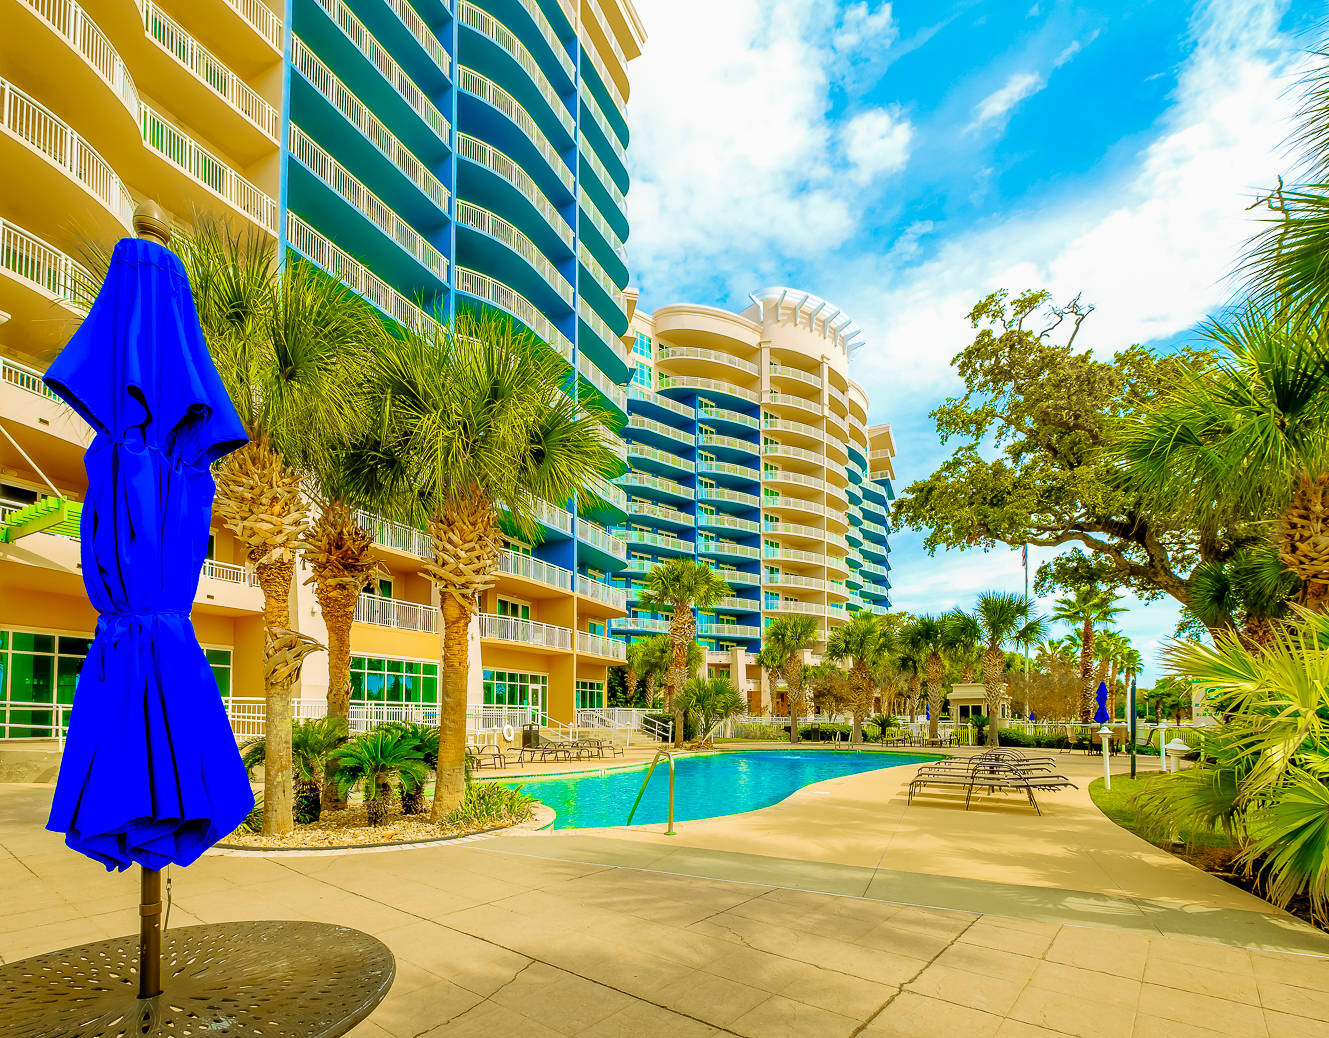 Gulfport Vacation Rental